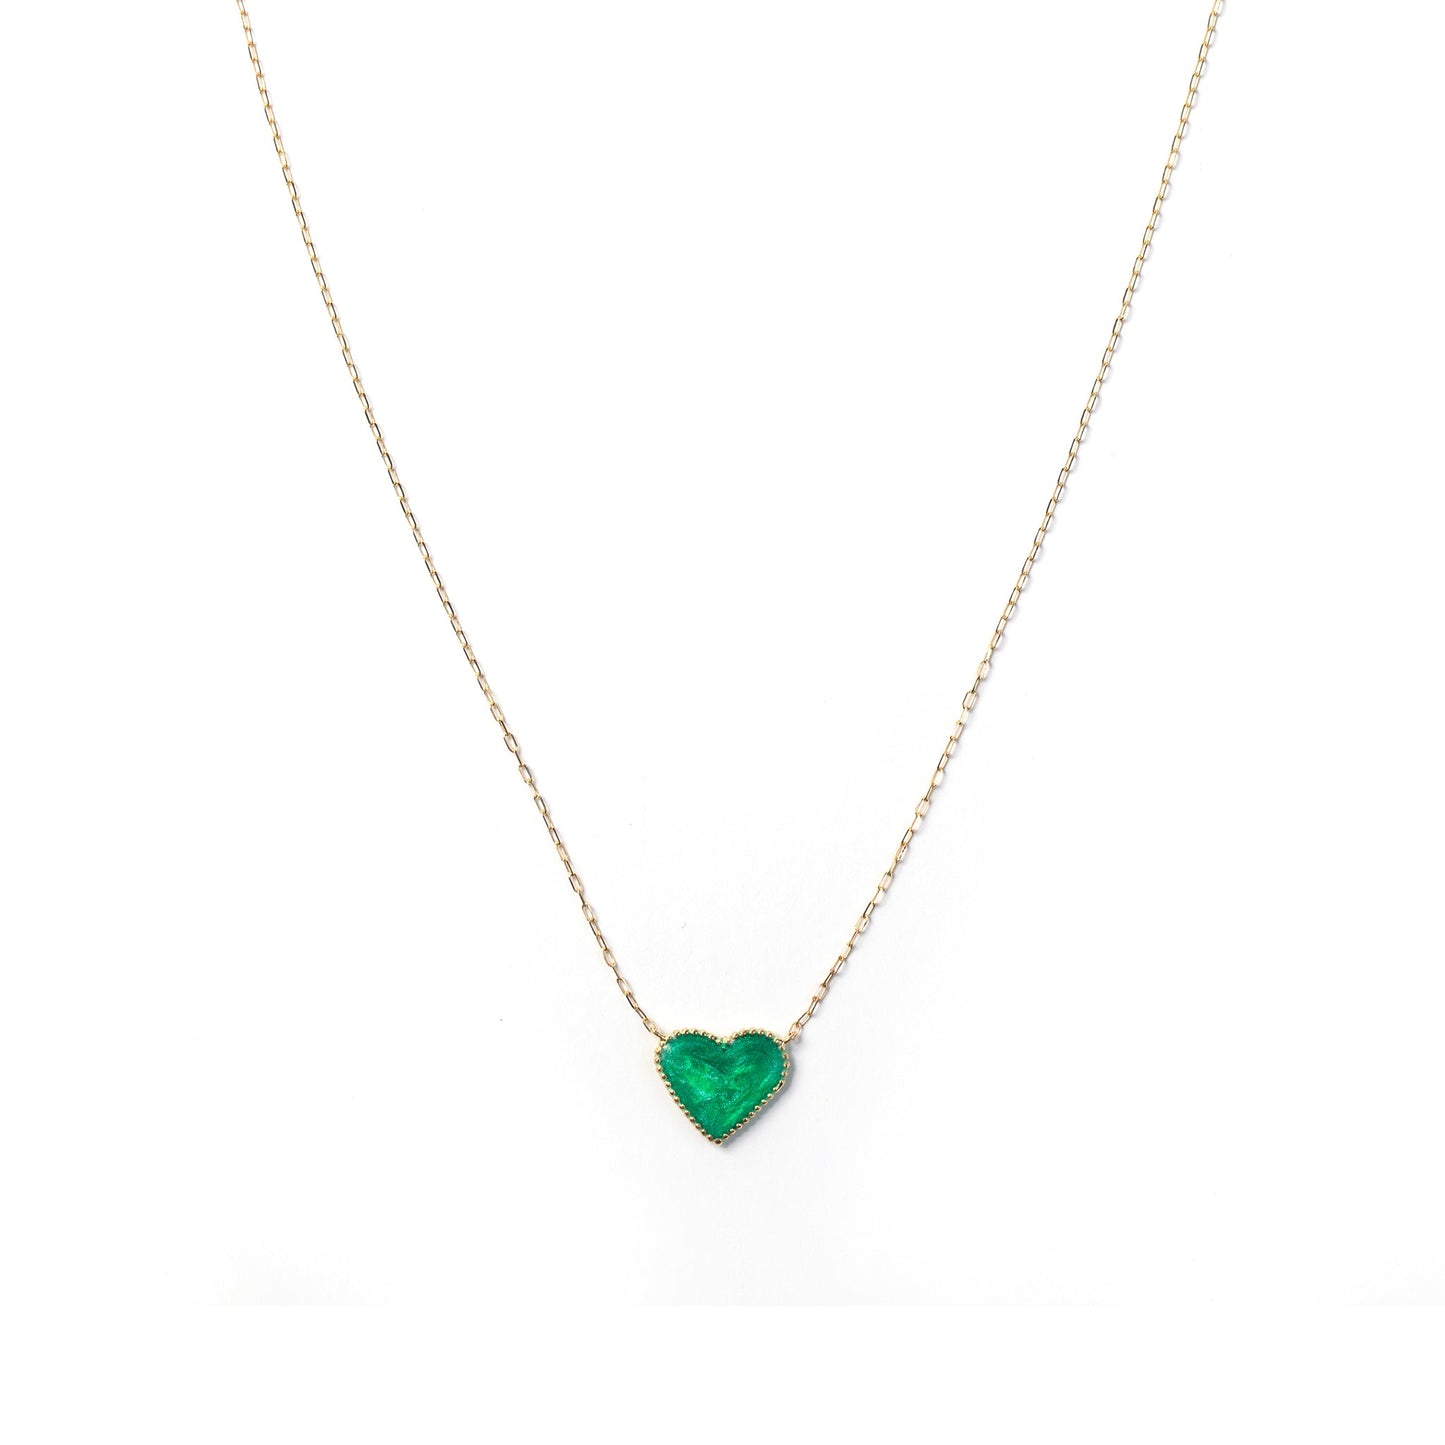 The Green Enamel heart necklace - Oria.jewelry